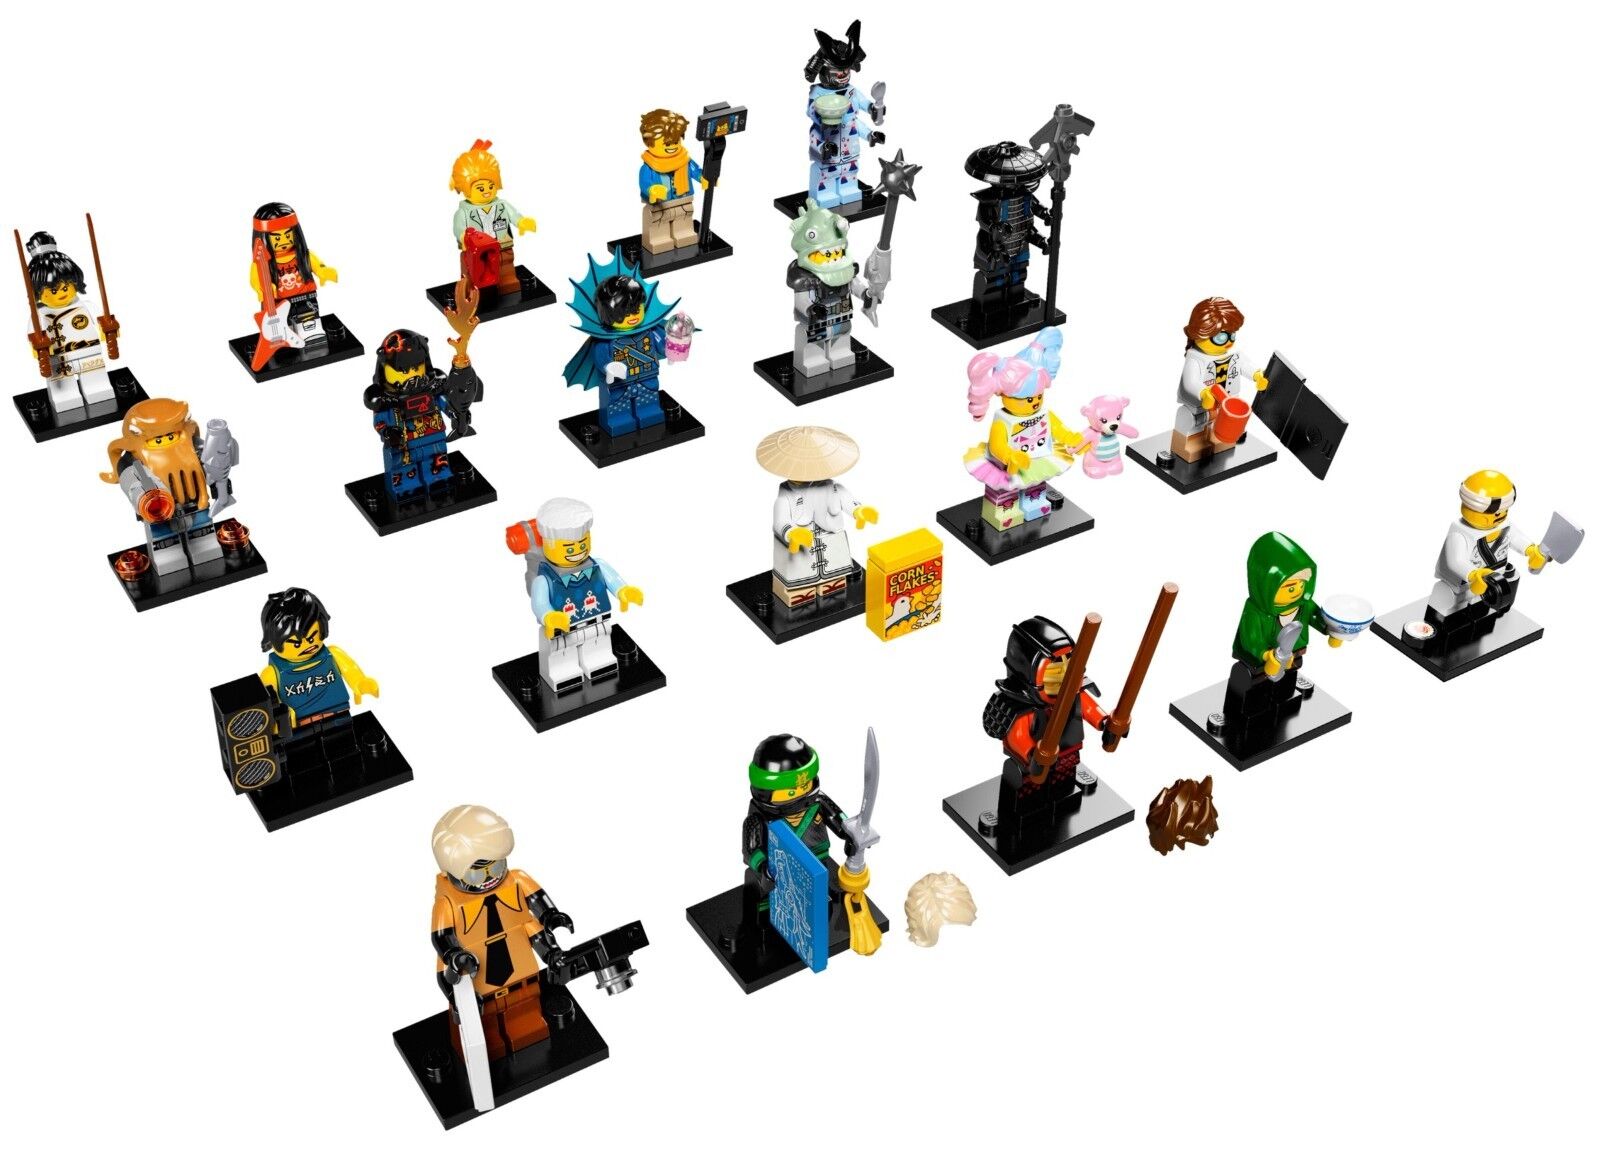  Lego 71019 The Ninjago Movie Minifigures New in Resealed Bag Lloyd Garmadon